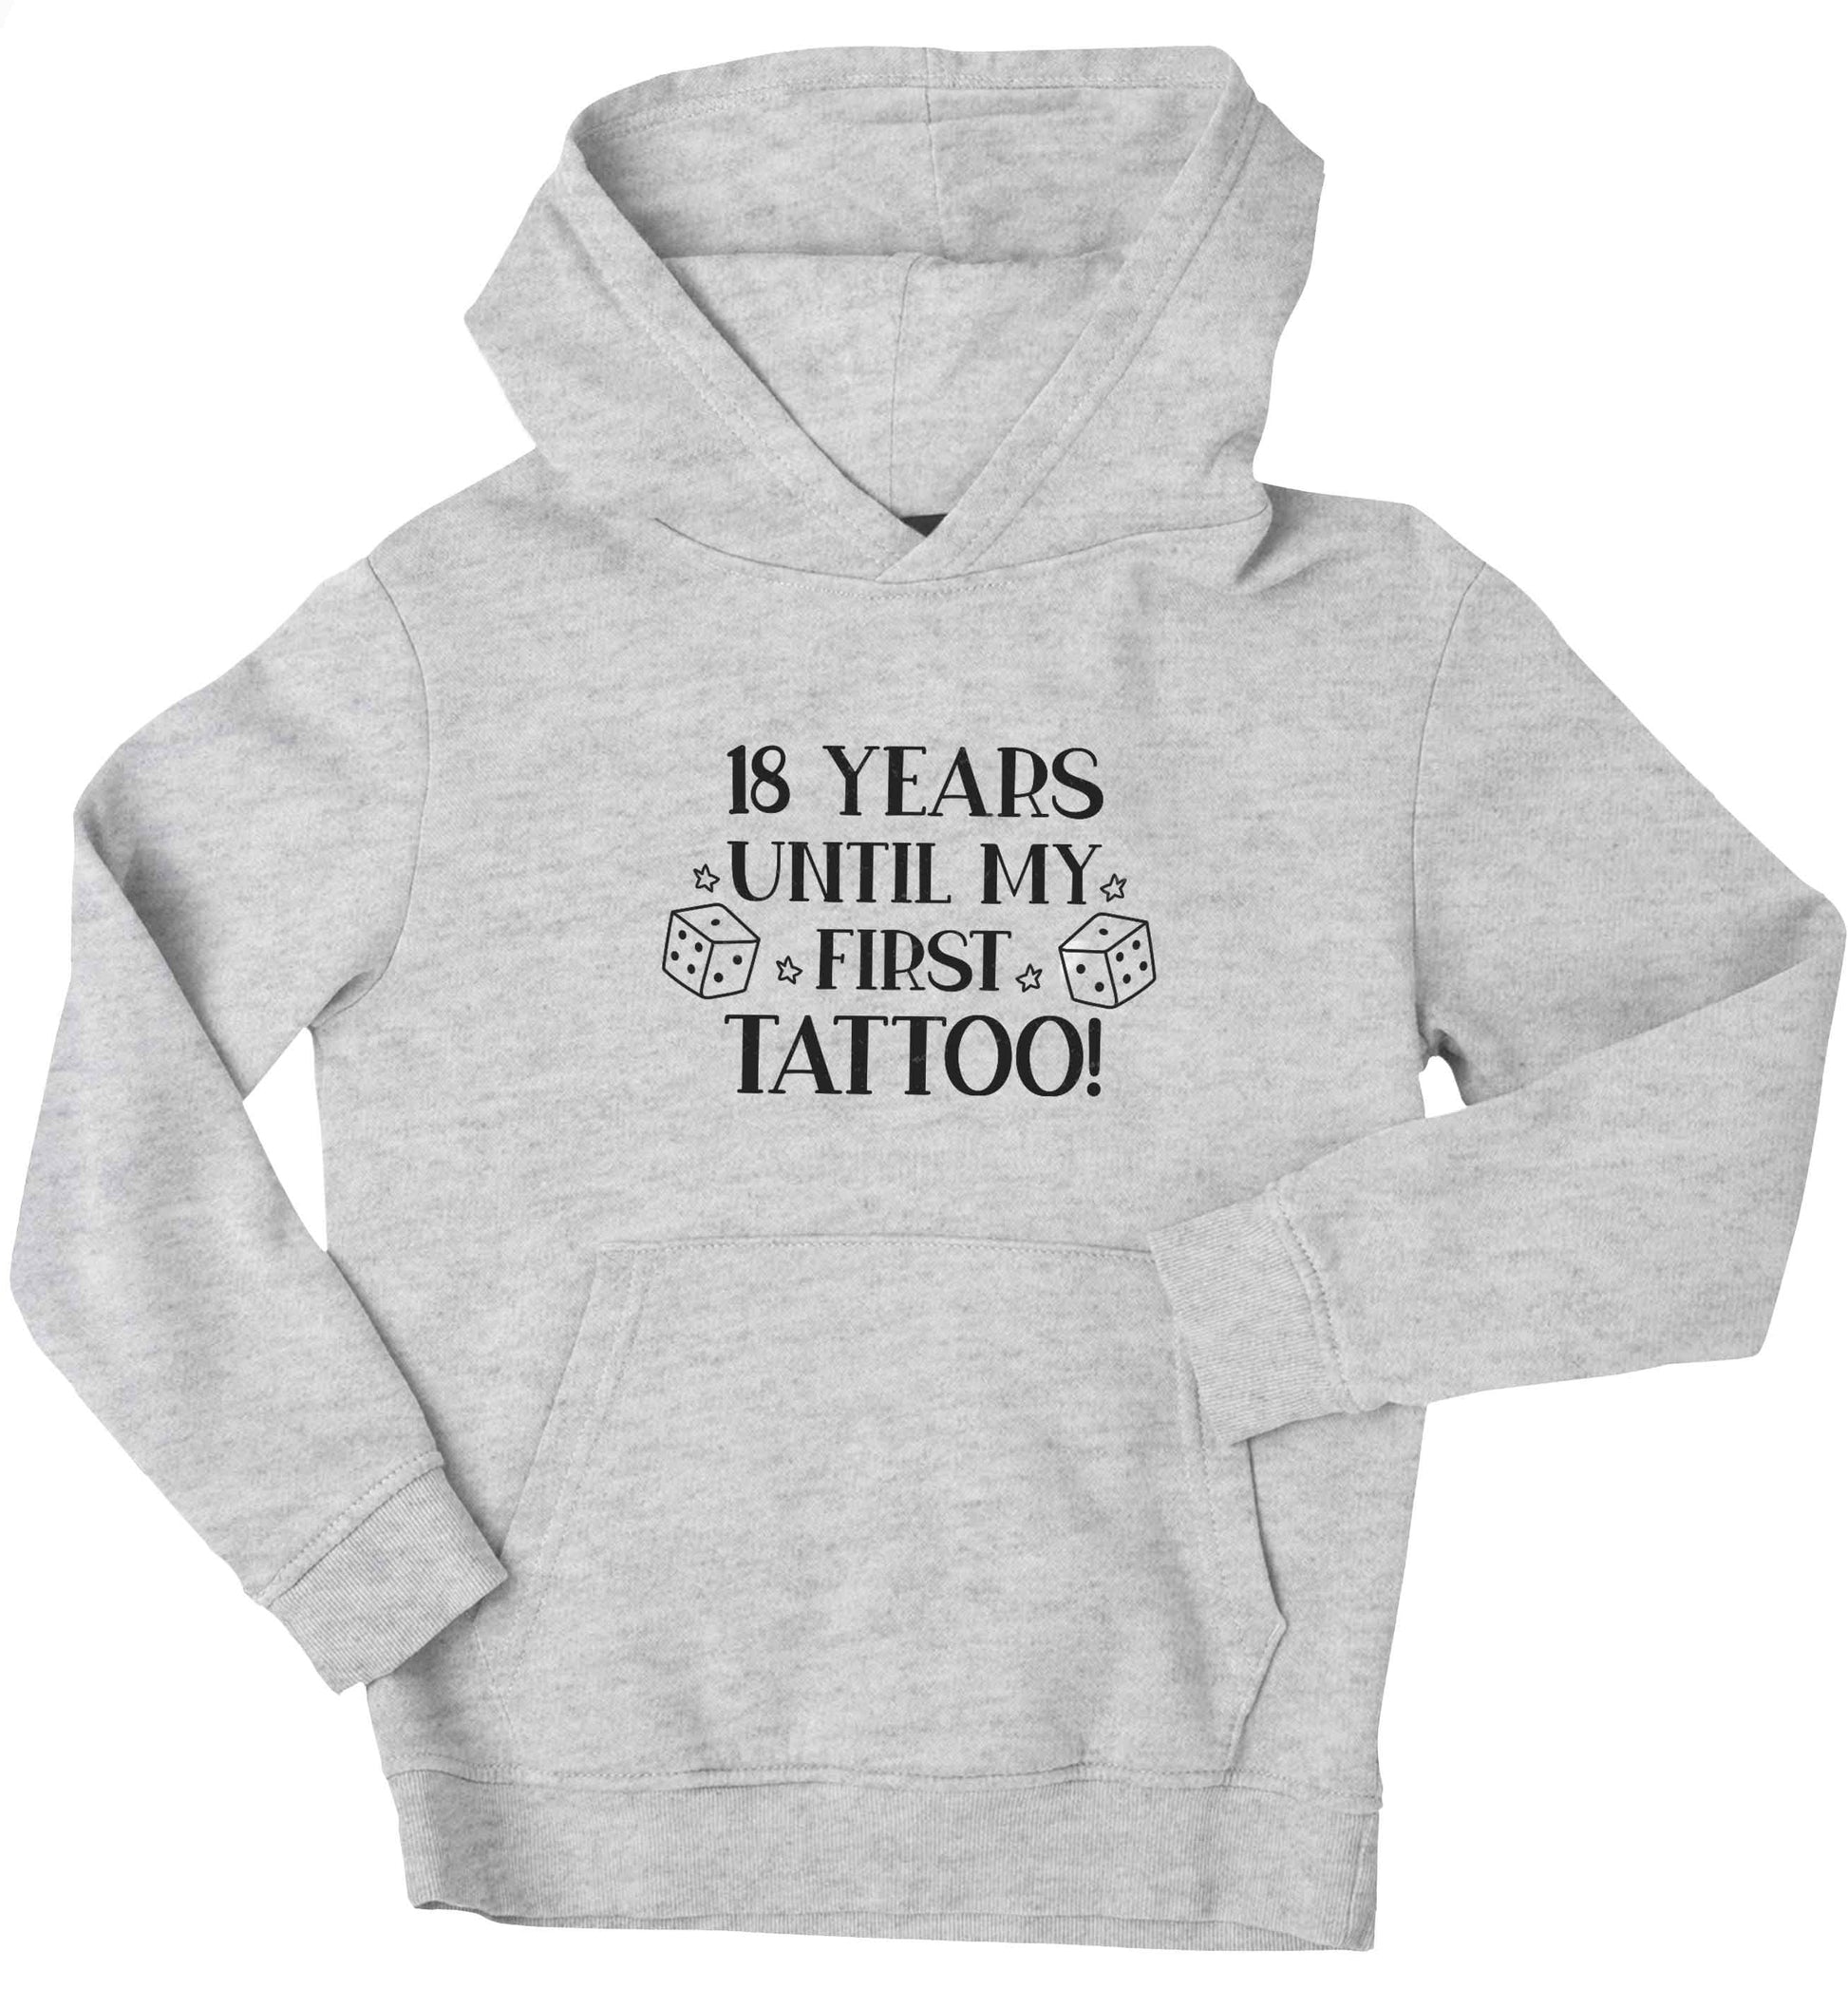 18 Years Until my First Tattoo children's grey hoodie 12-13 Years